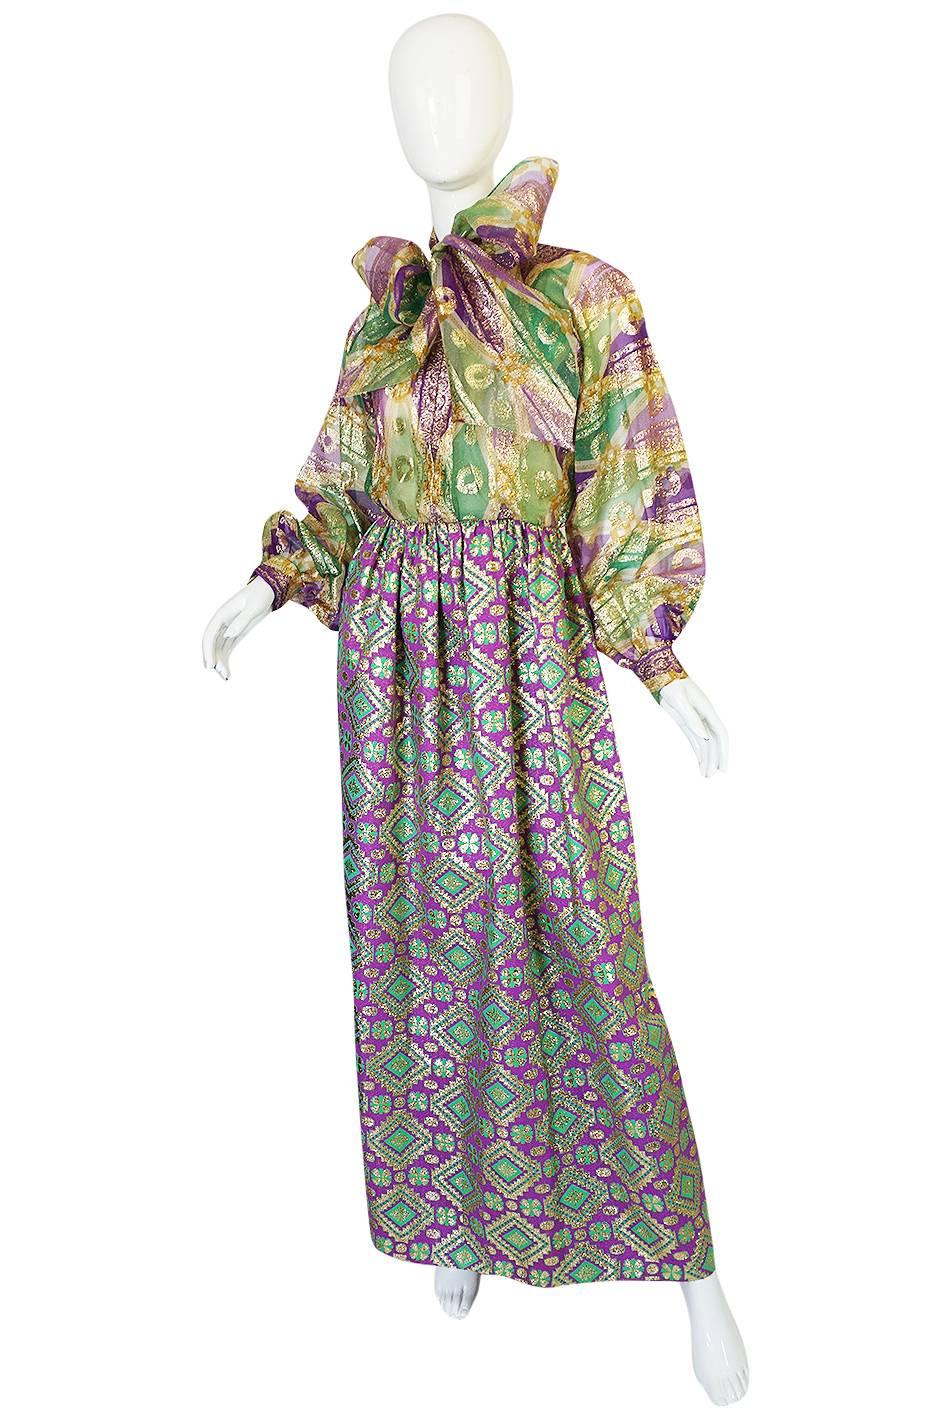 Gray Bowed c1969 Oscar de la Renta Metallic Silk Hostess Dress